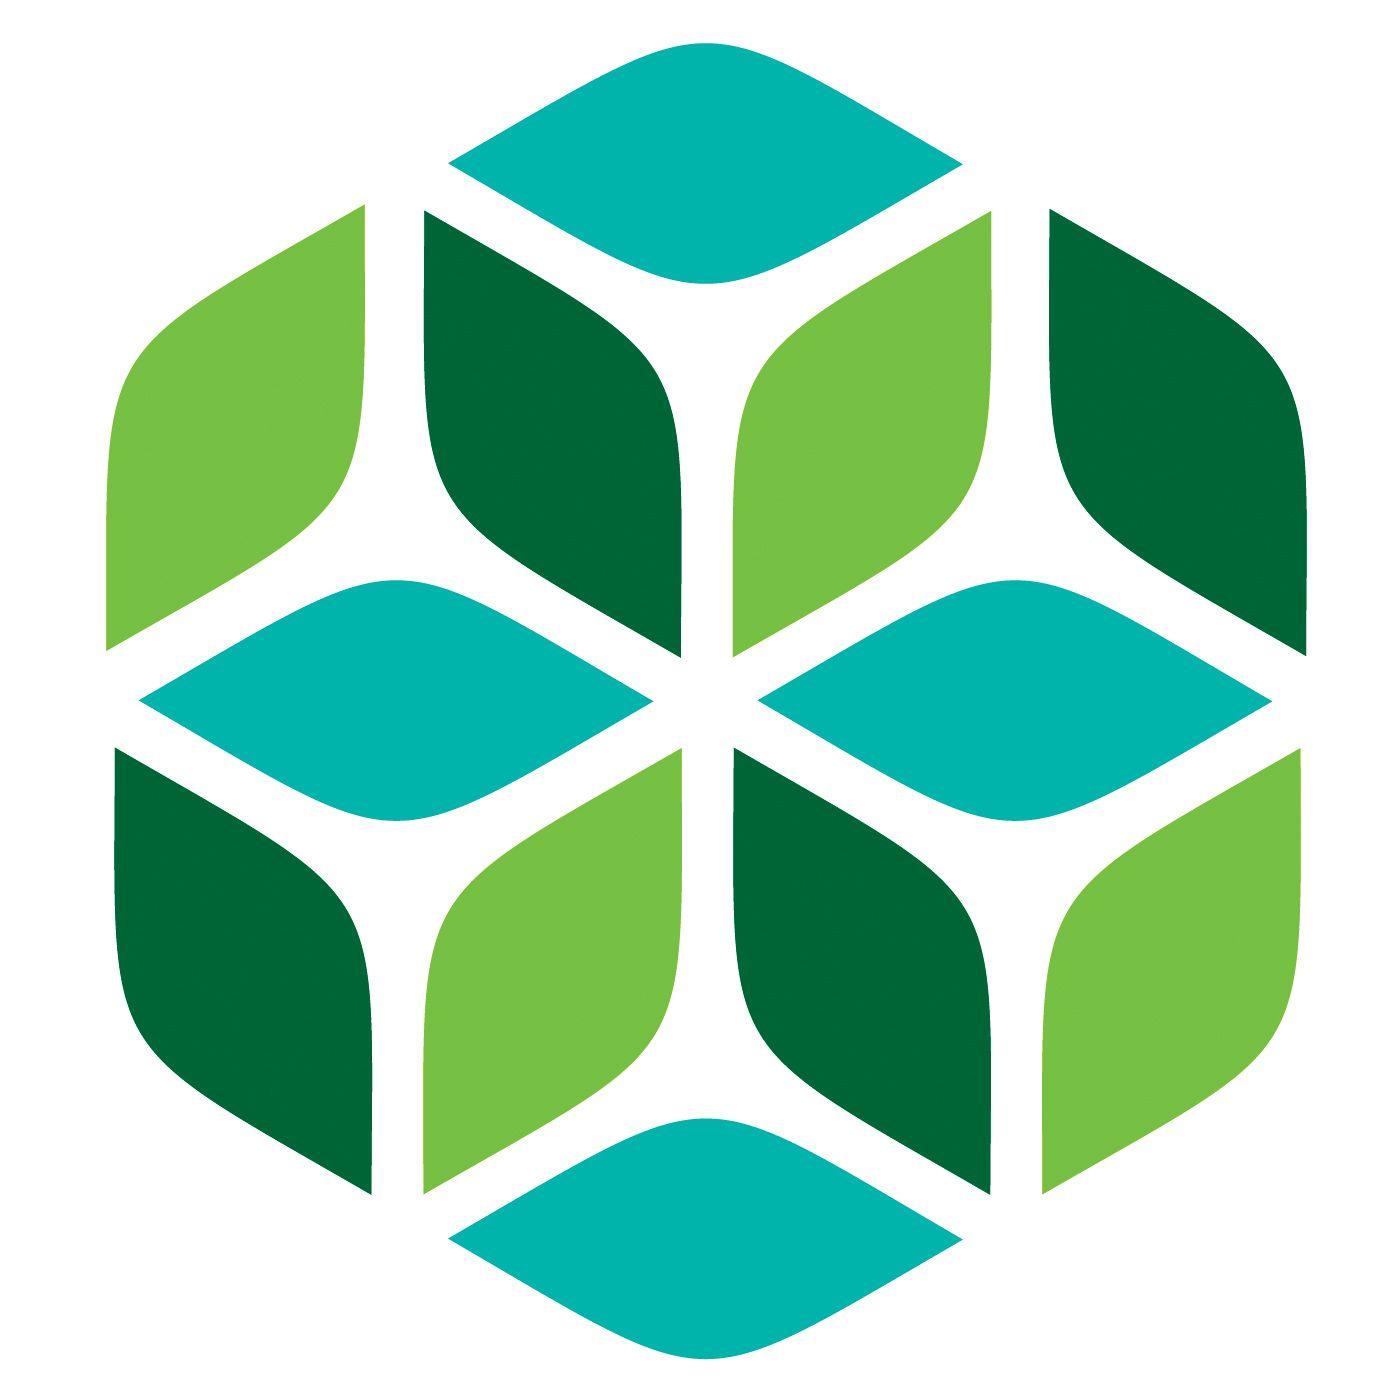 Green Flower Shape of Logo - Gardner Design - Refined Technologies logo design. Within a simple ...